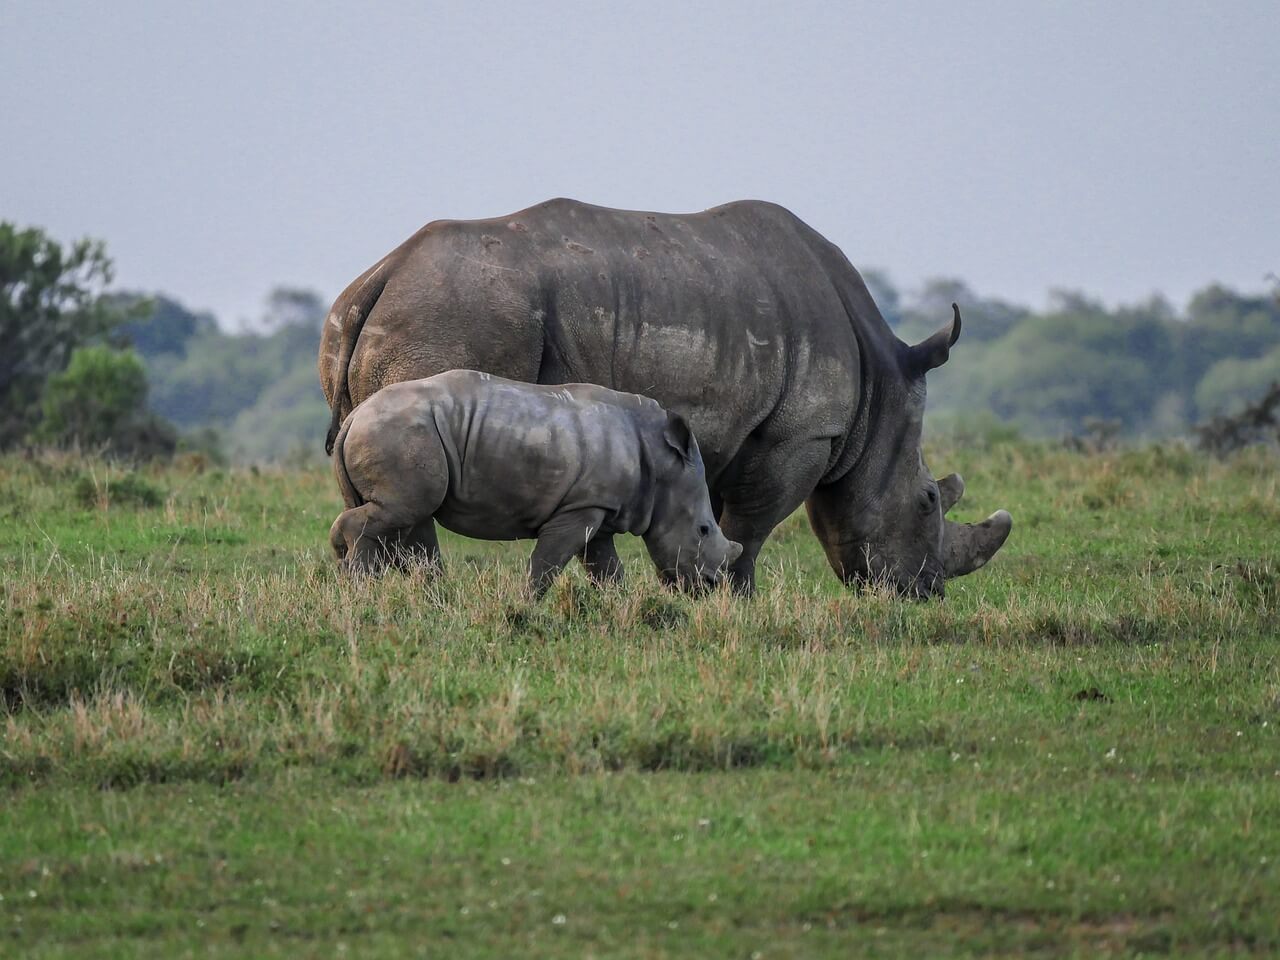 Ol Pejeta Day Trip From Nairobi (Visit a Rhino Sanctuary)